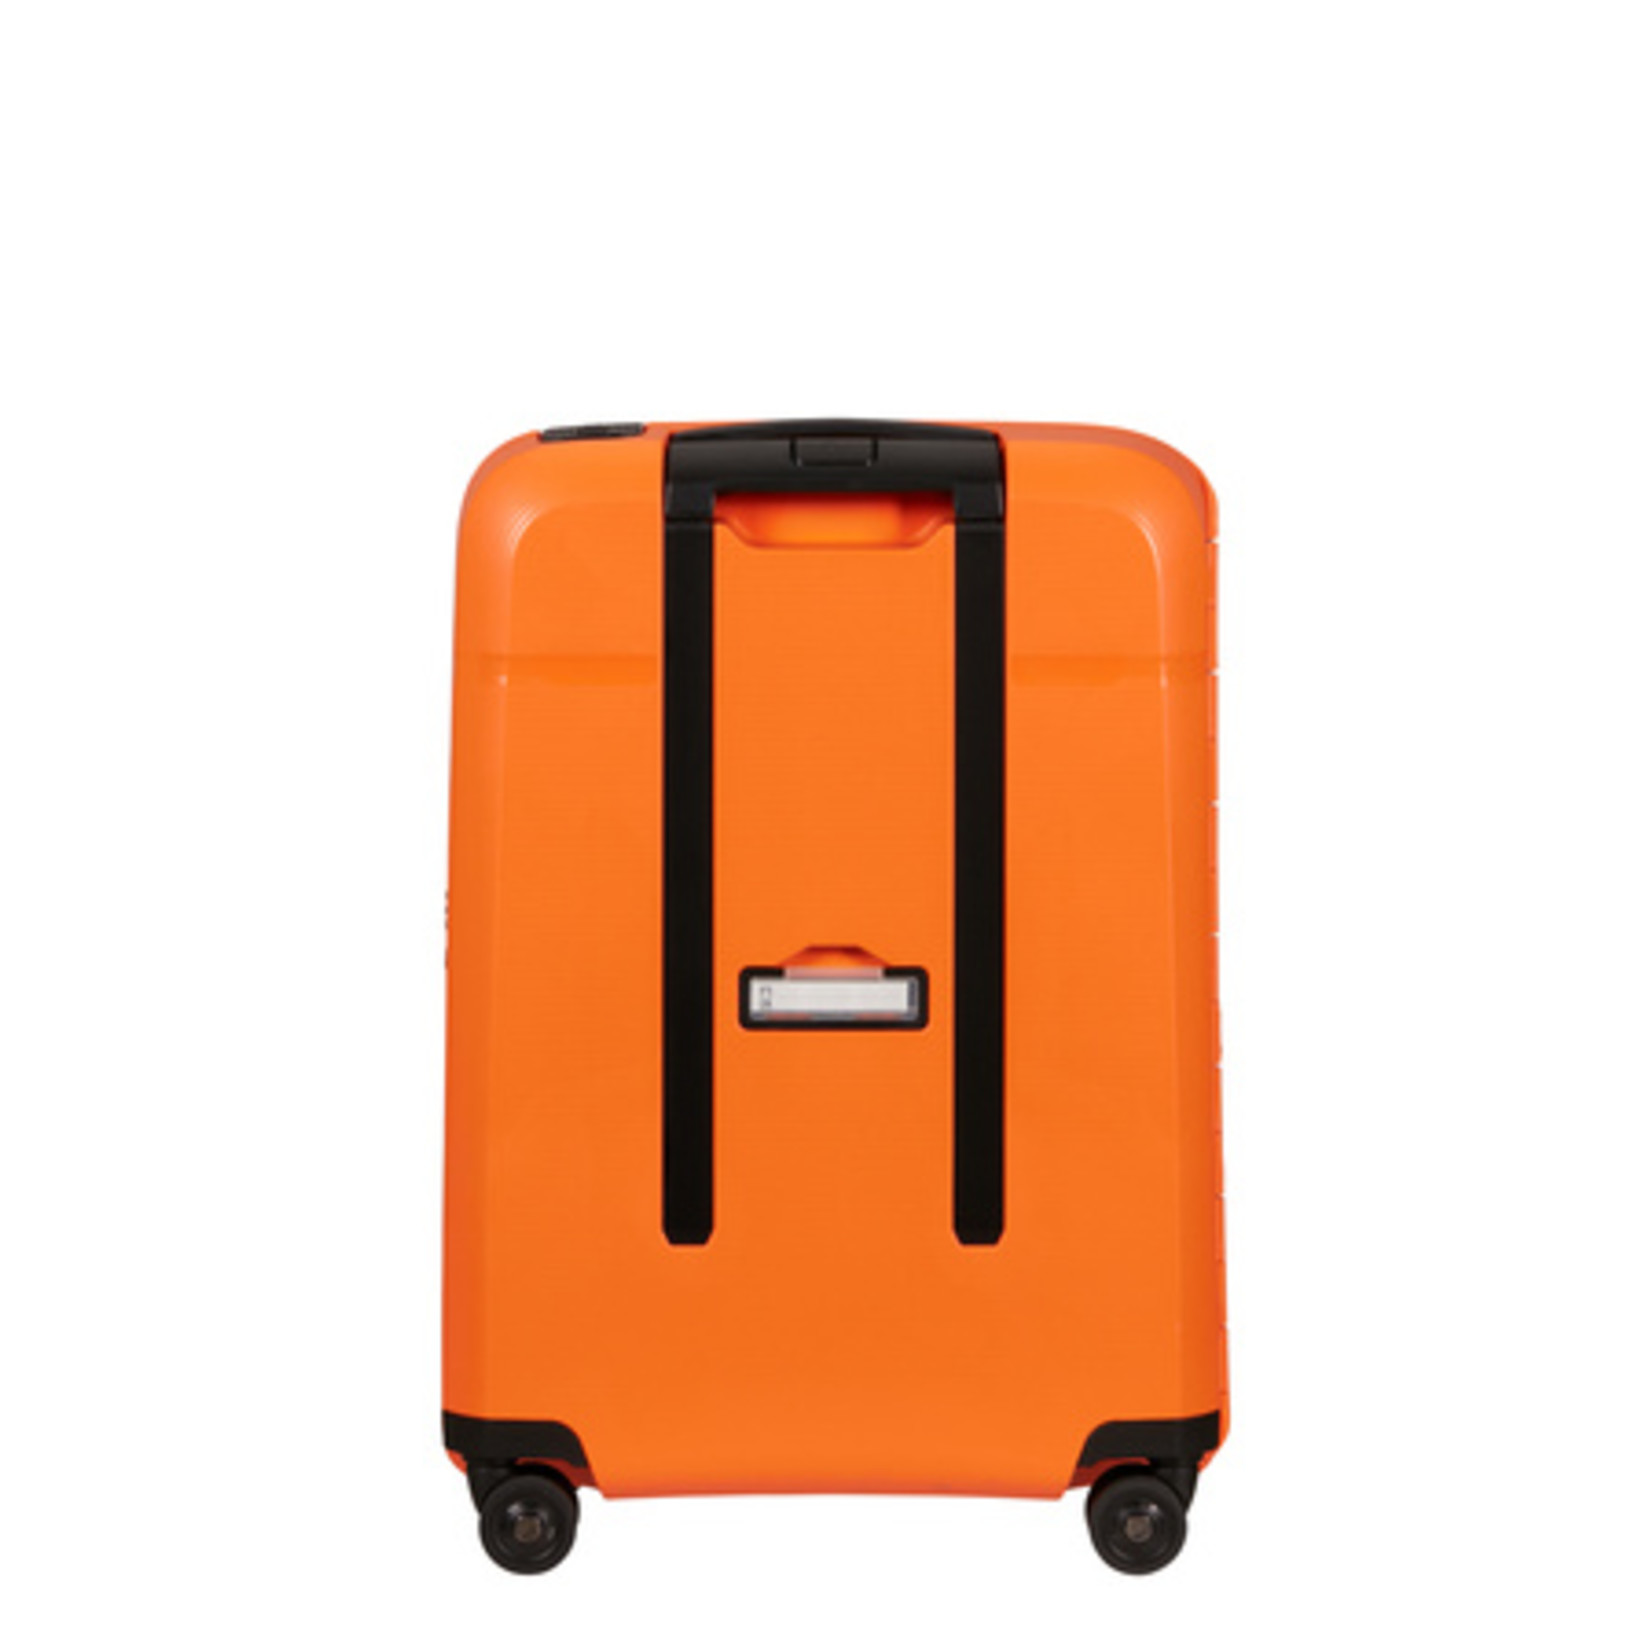 Samsonite Samsonite Magnum Eco Spinner 55 - Radiant Orange